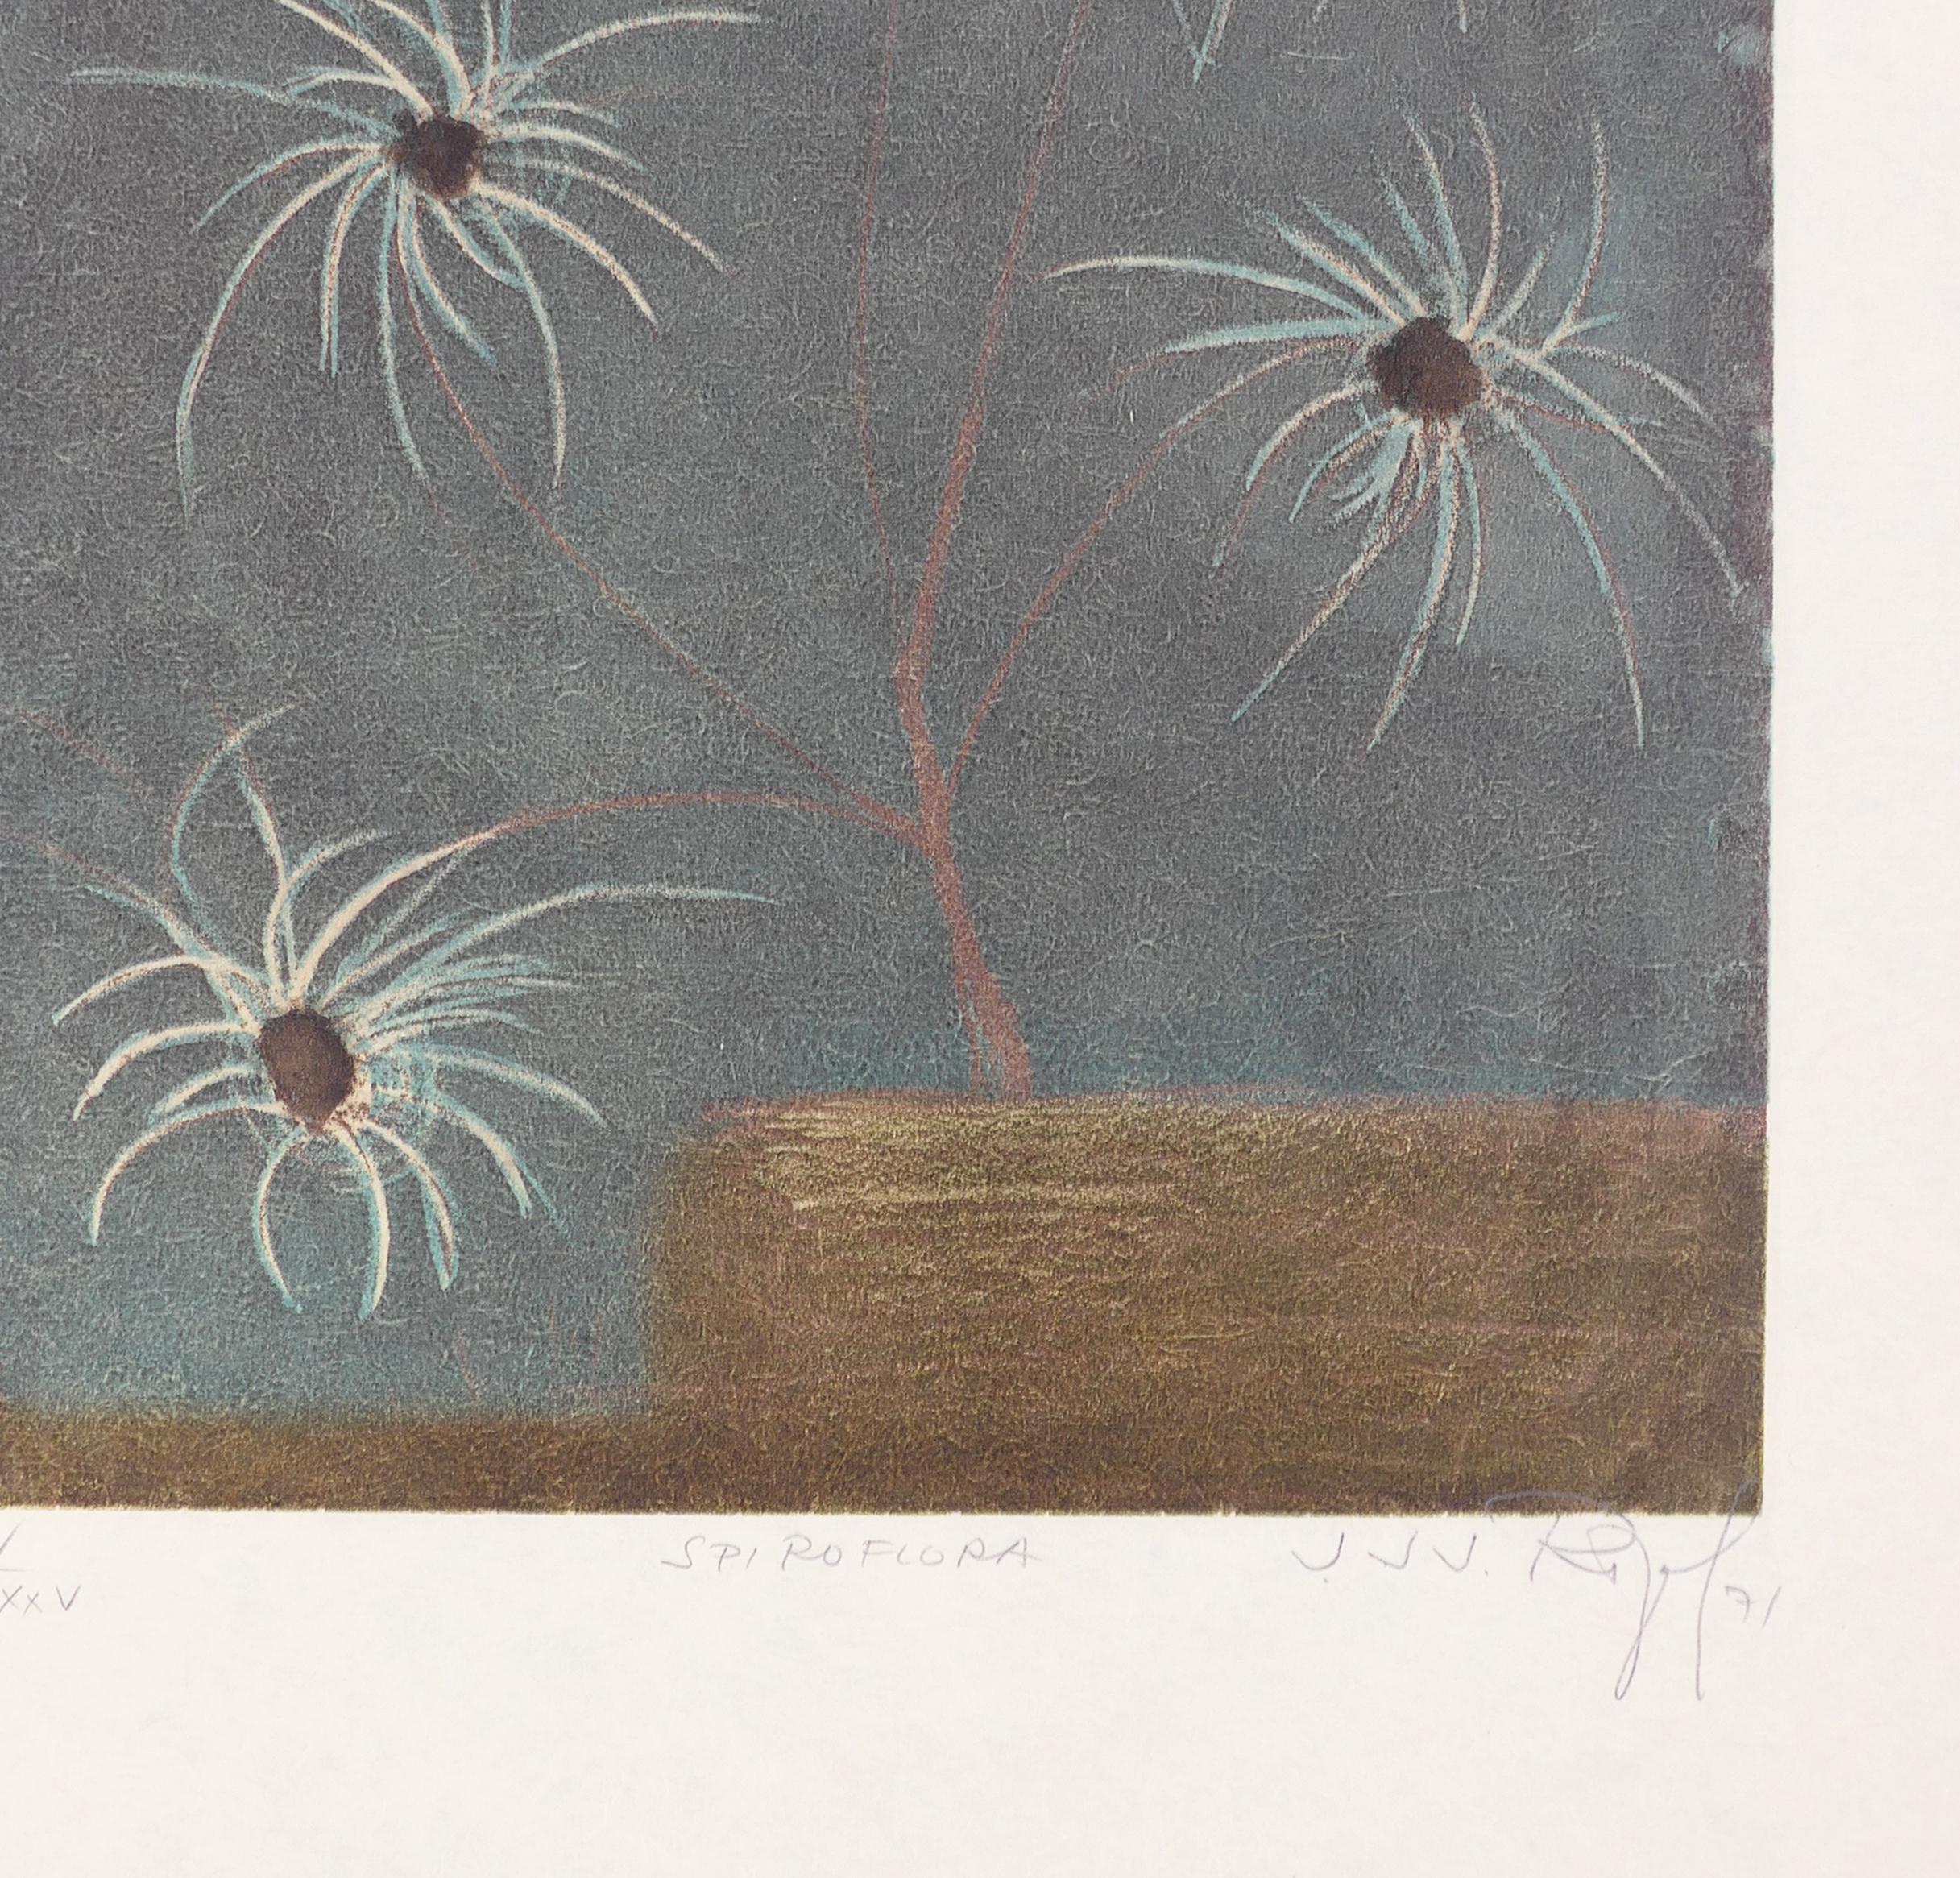 Spiroflora - Original Etching and Aquatint by J.J.J. Rigal - 1971 - Print by Jacques Joachim Jean Rigal